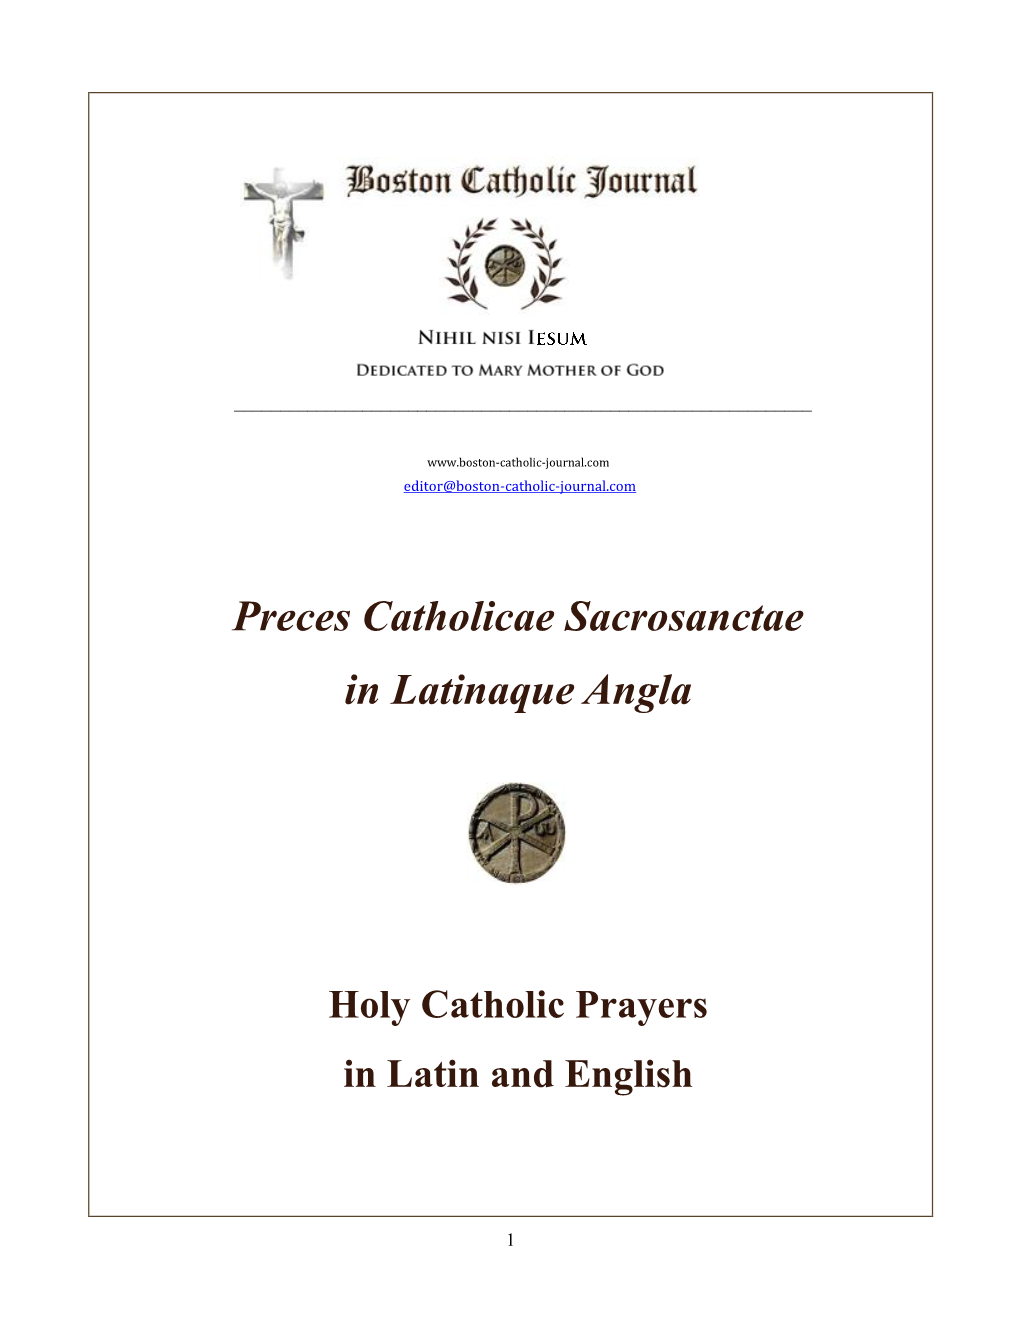 Preces Catholicae Sacrosanctae in Latinaque Angla